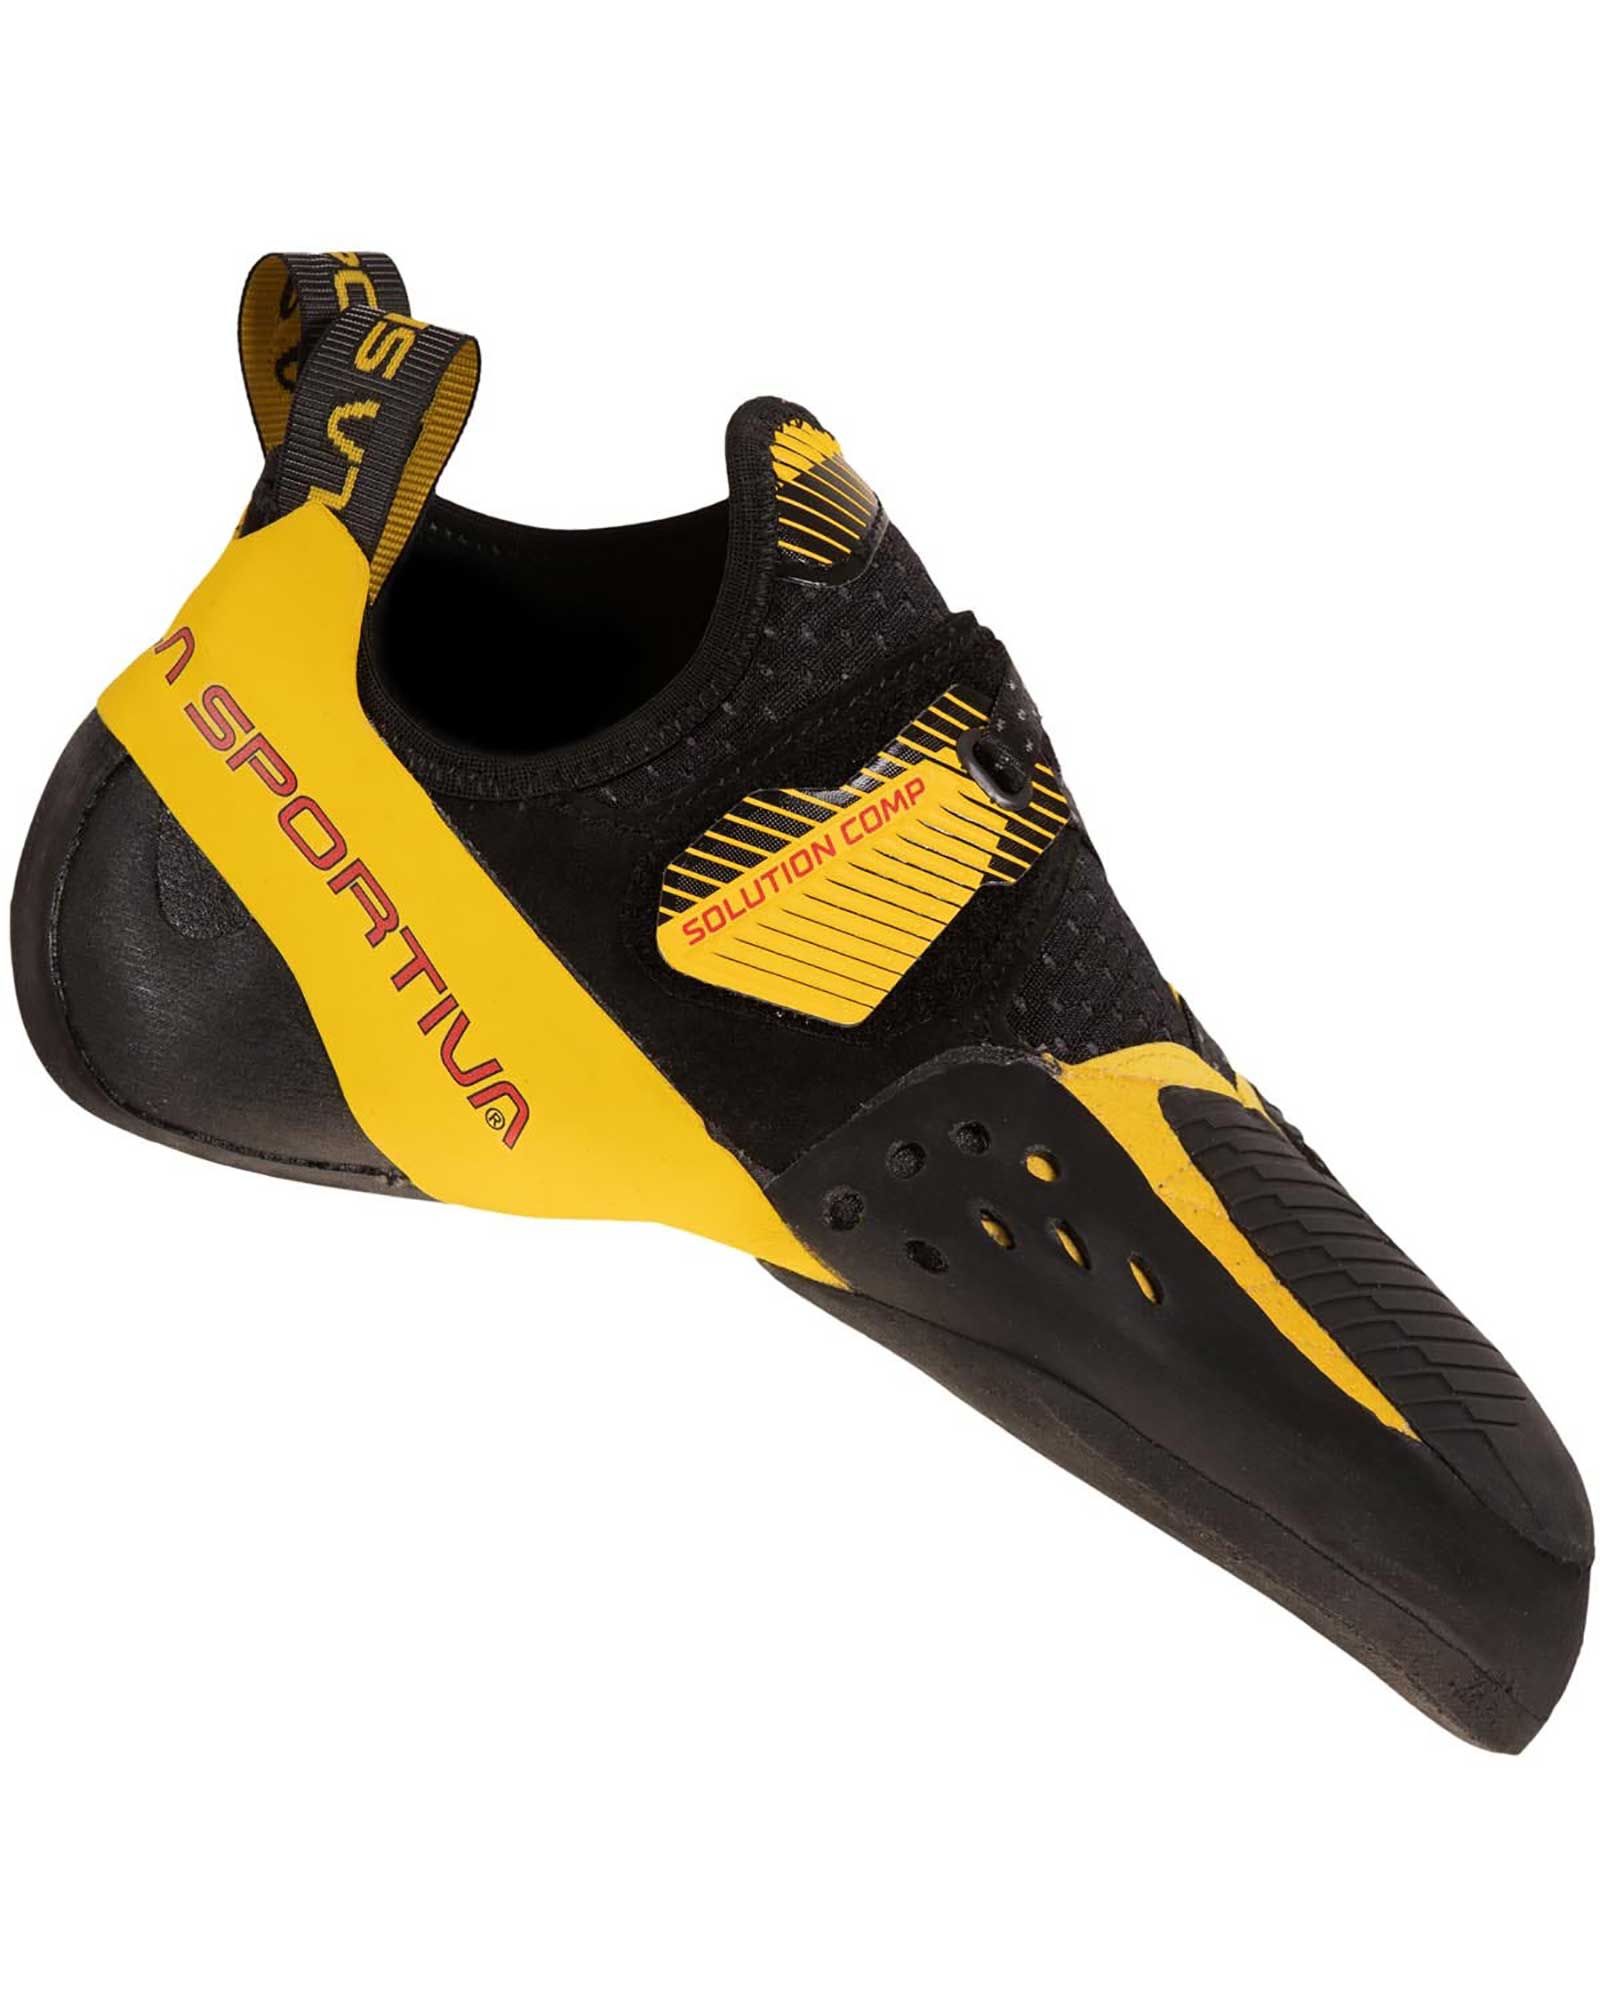 La Sportiva Solution Comp Men’s Shoes - Black/Yellow EU 41